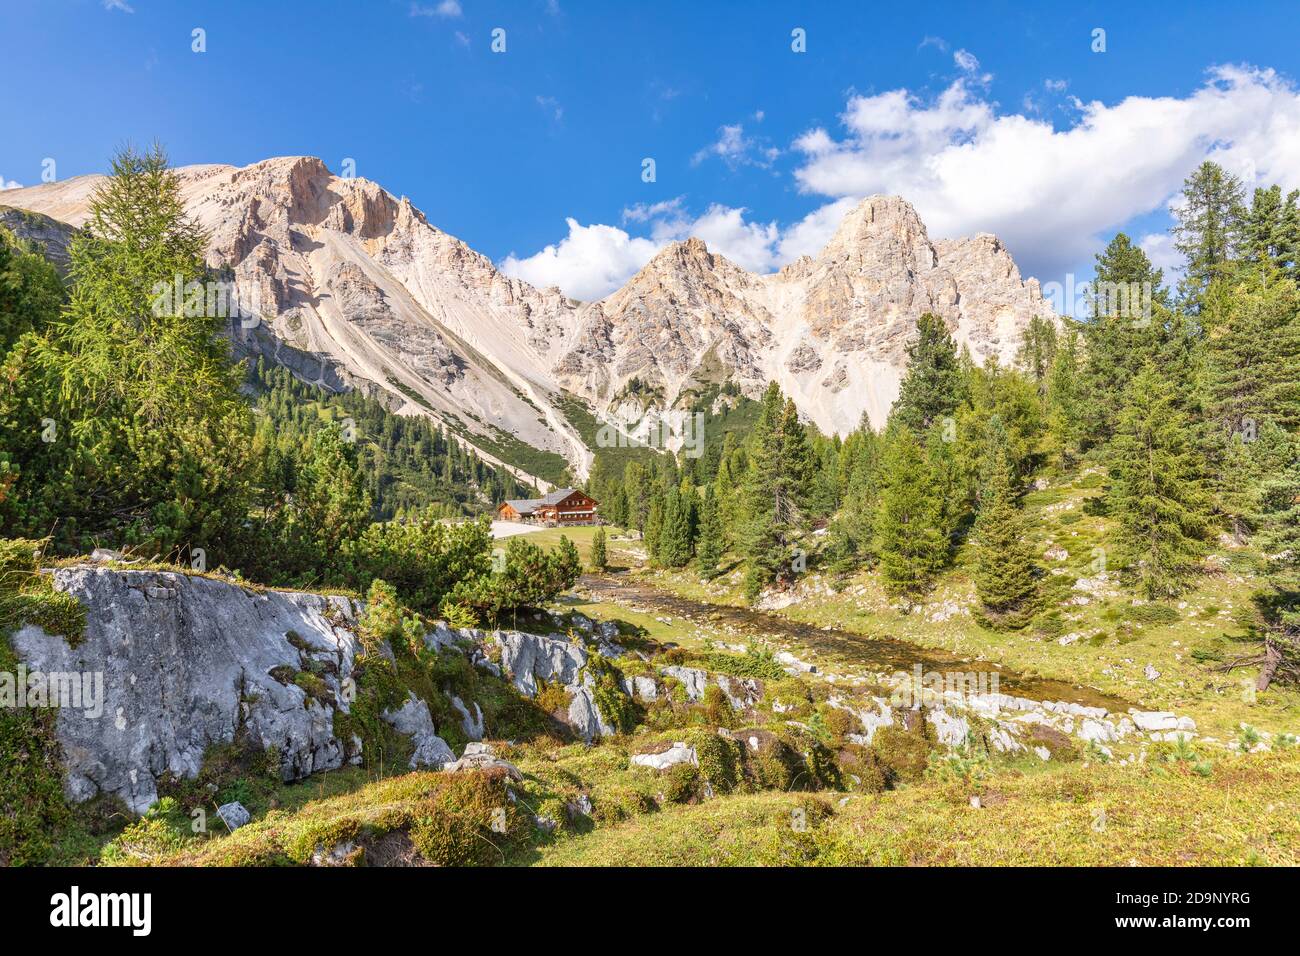 Cima Forca di Ferro mountain / Eisengabelspitze, alpine landscape in the Dolomites of Fanes Sennes Braies, San Vigilio di Marebbe / St. Vigil in Enneberg, Bolzano / Bozen, South Tyrol / Südtirol, Italy, Europe, Stock Photo